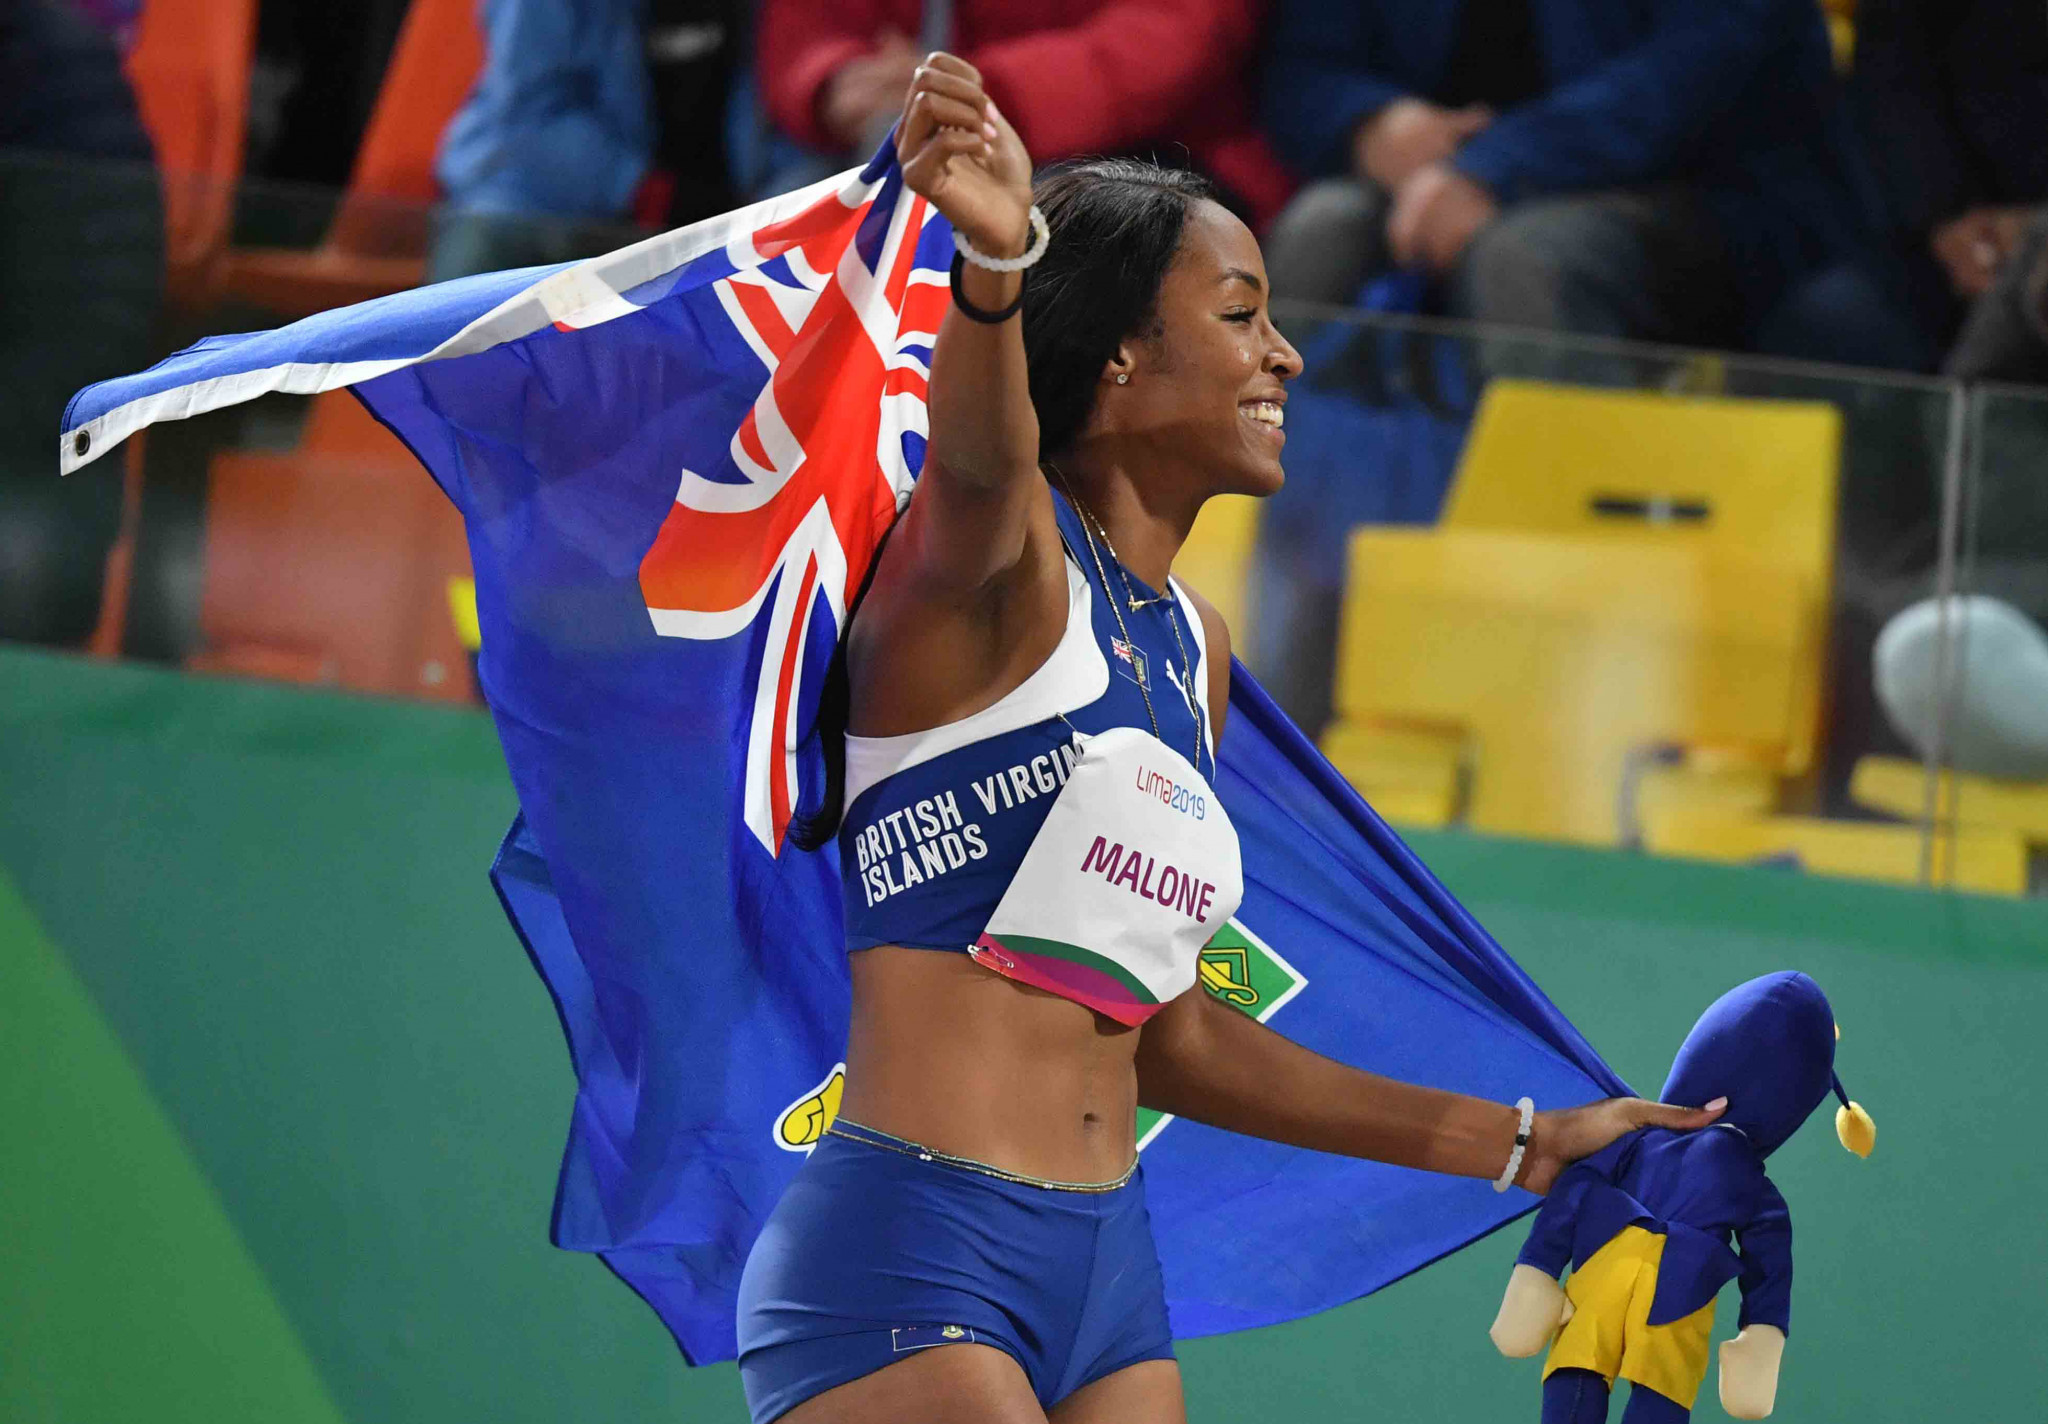 Chantel Malone won British Virgin Islands' first Pan American Games medal ©Getty Images